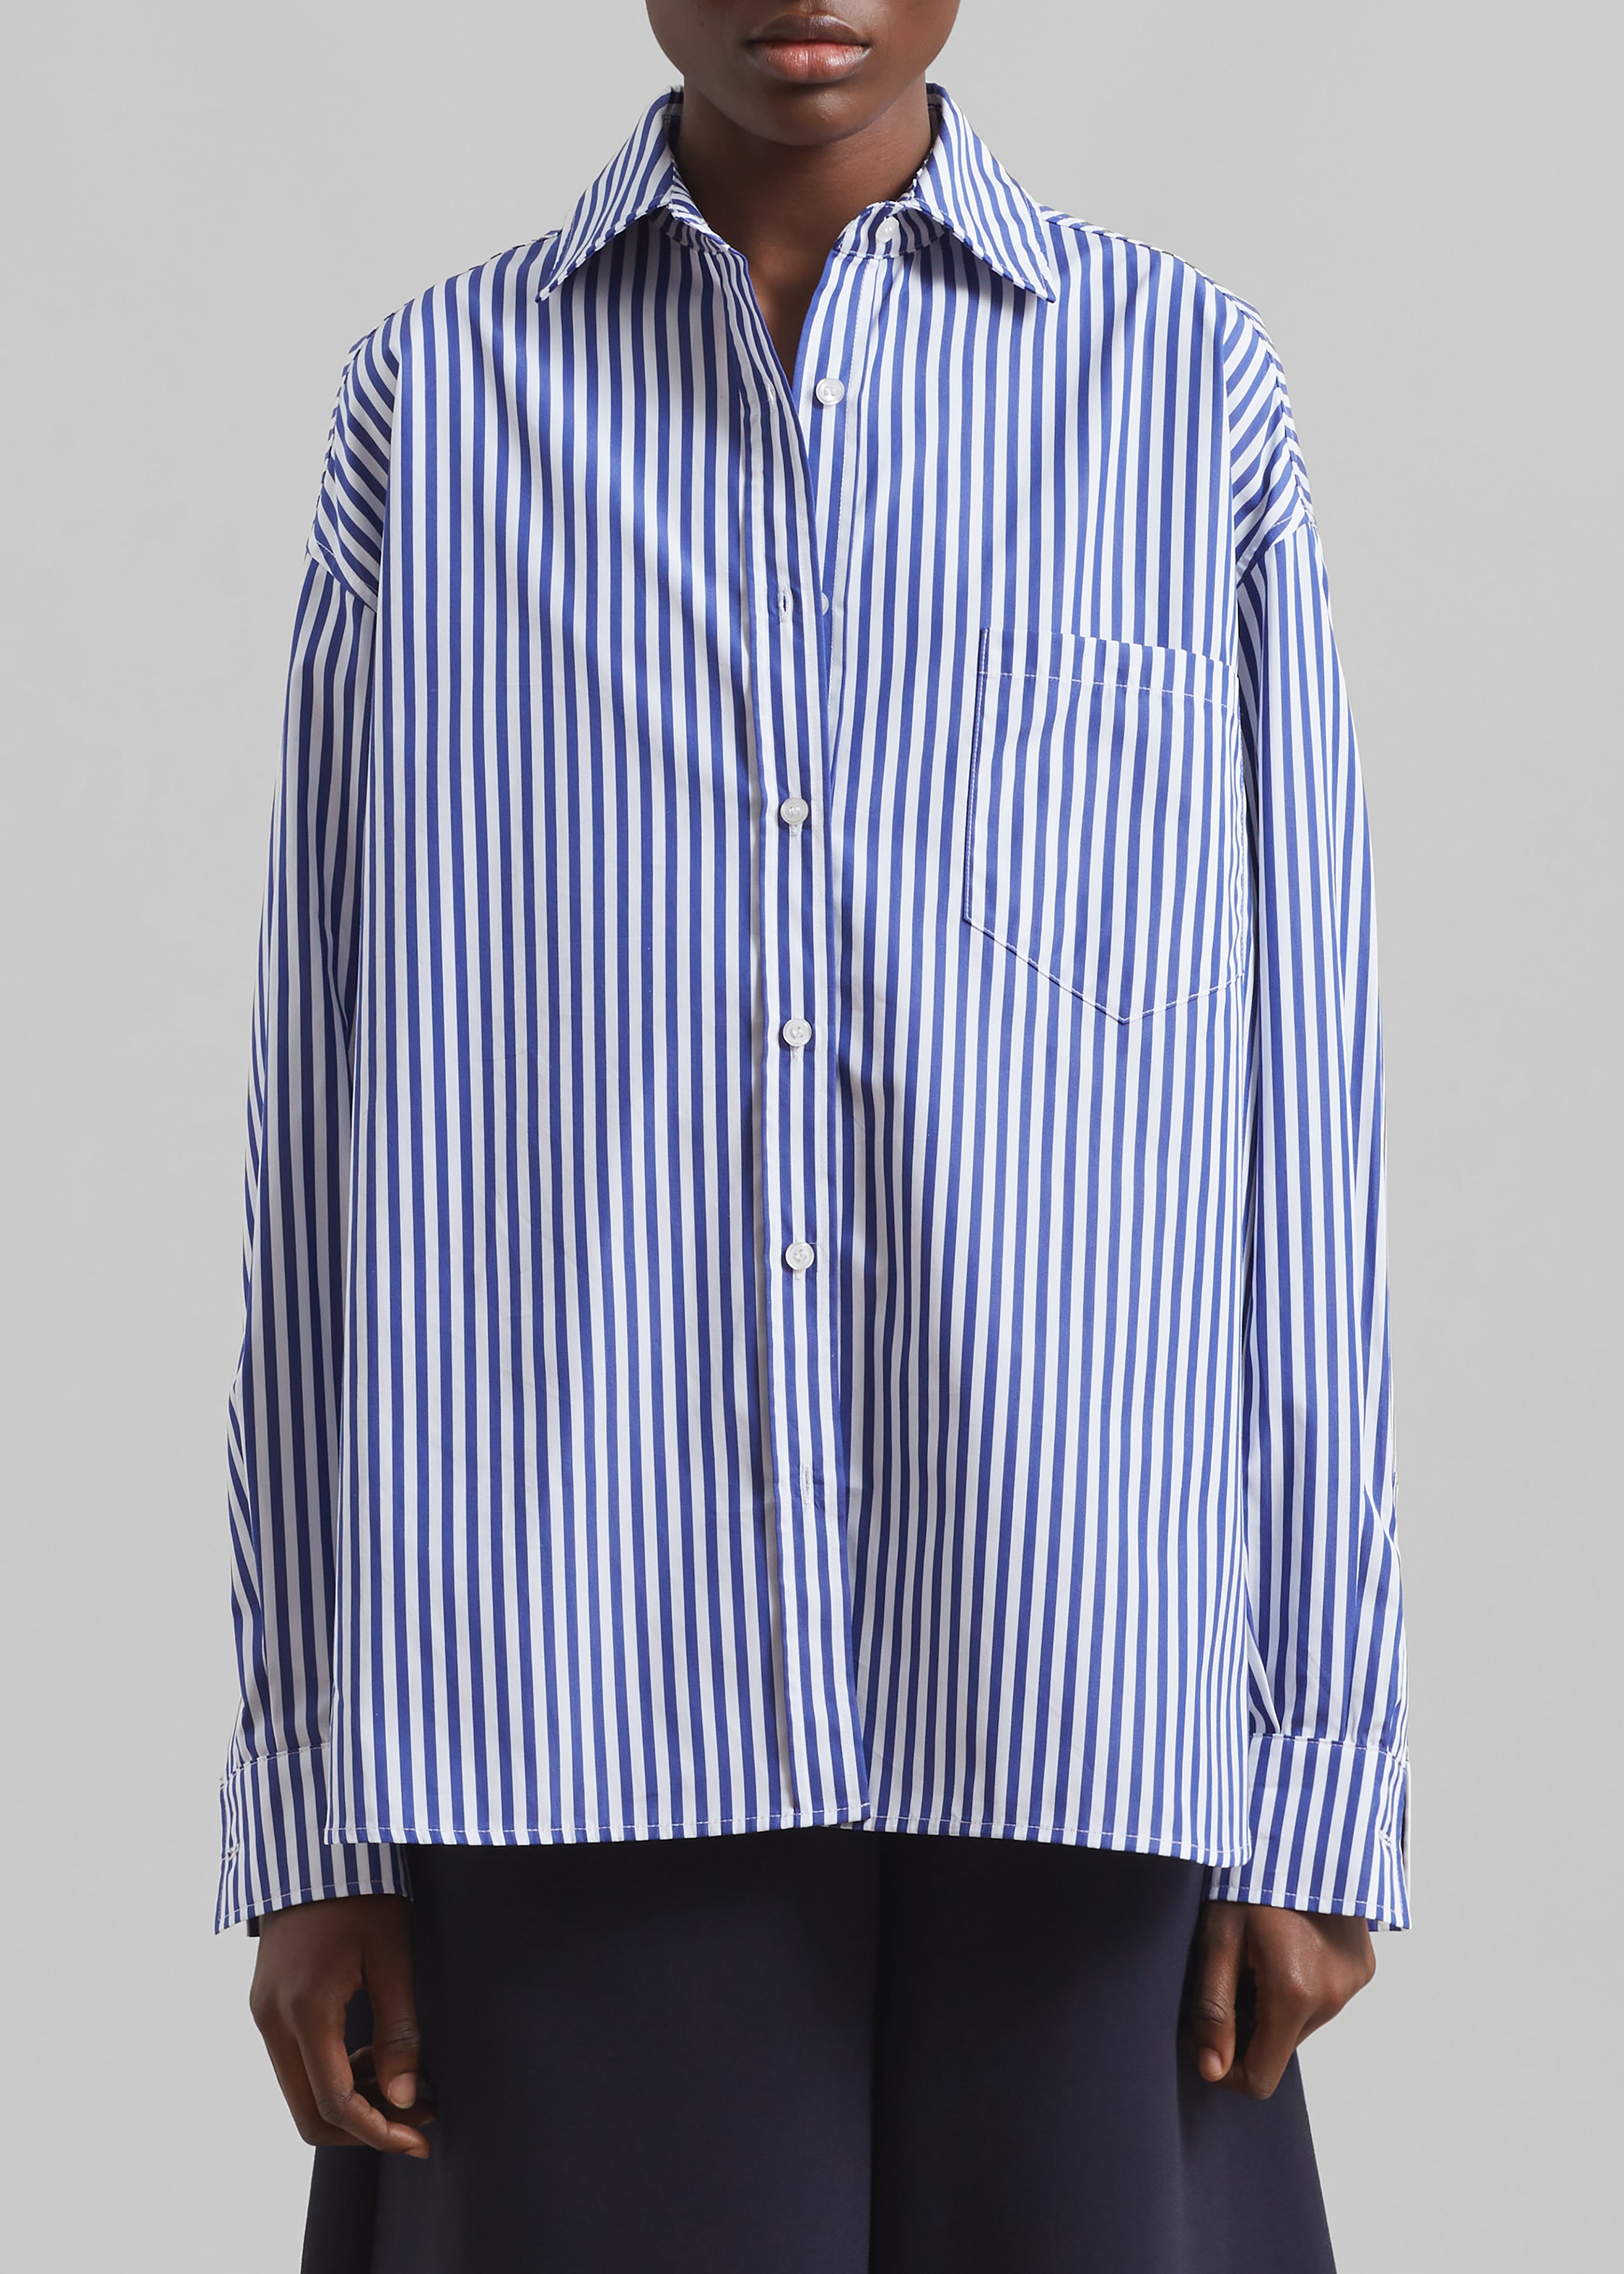 Georgia Boxy Shirt - White/Blue Stripe - 3